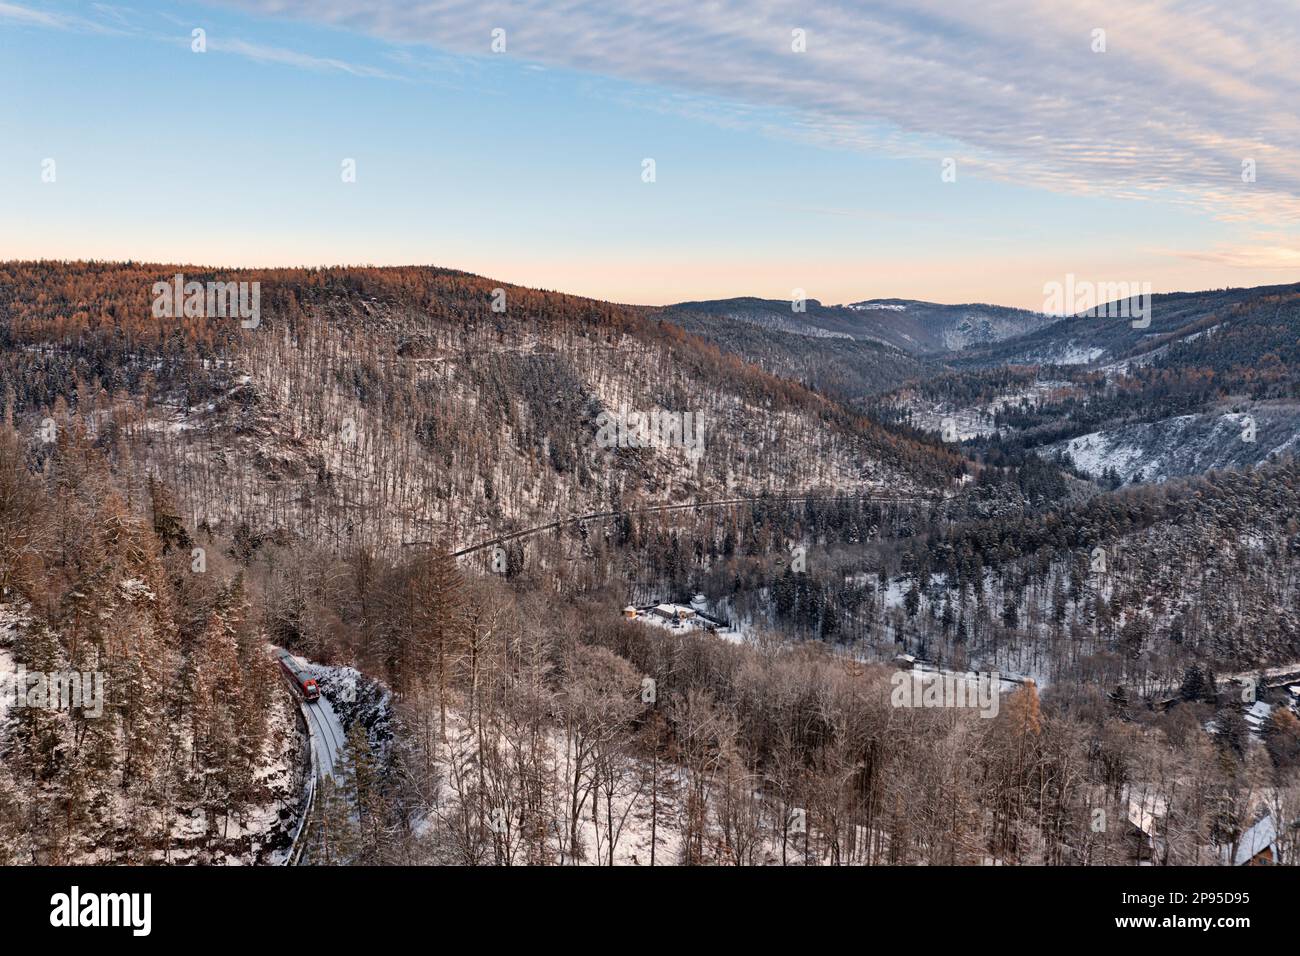 Germany, Thuringia, Schwarzburg, Schwarzatal, regional train 60, train 29874, forest, train, landscape, snow, overview, morning light Stock Photo